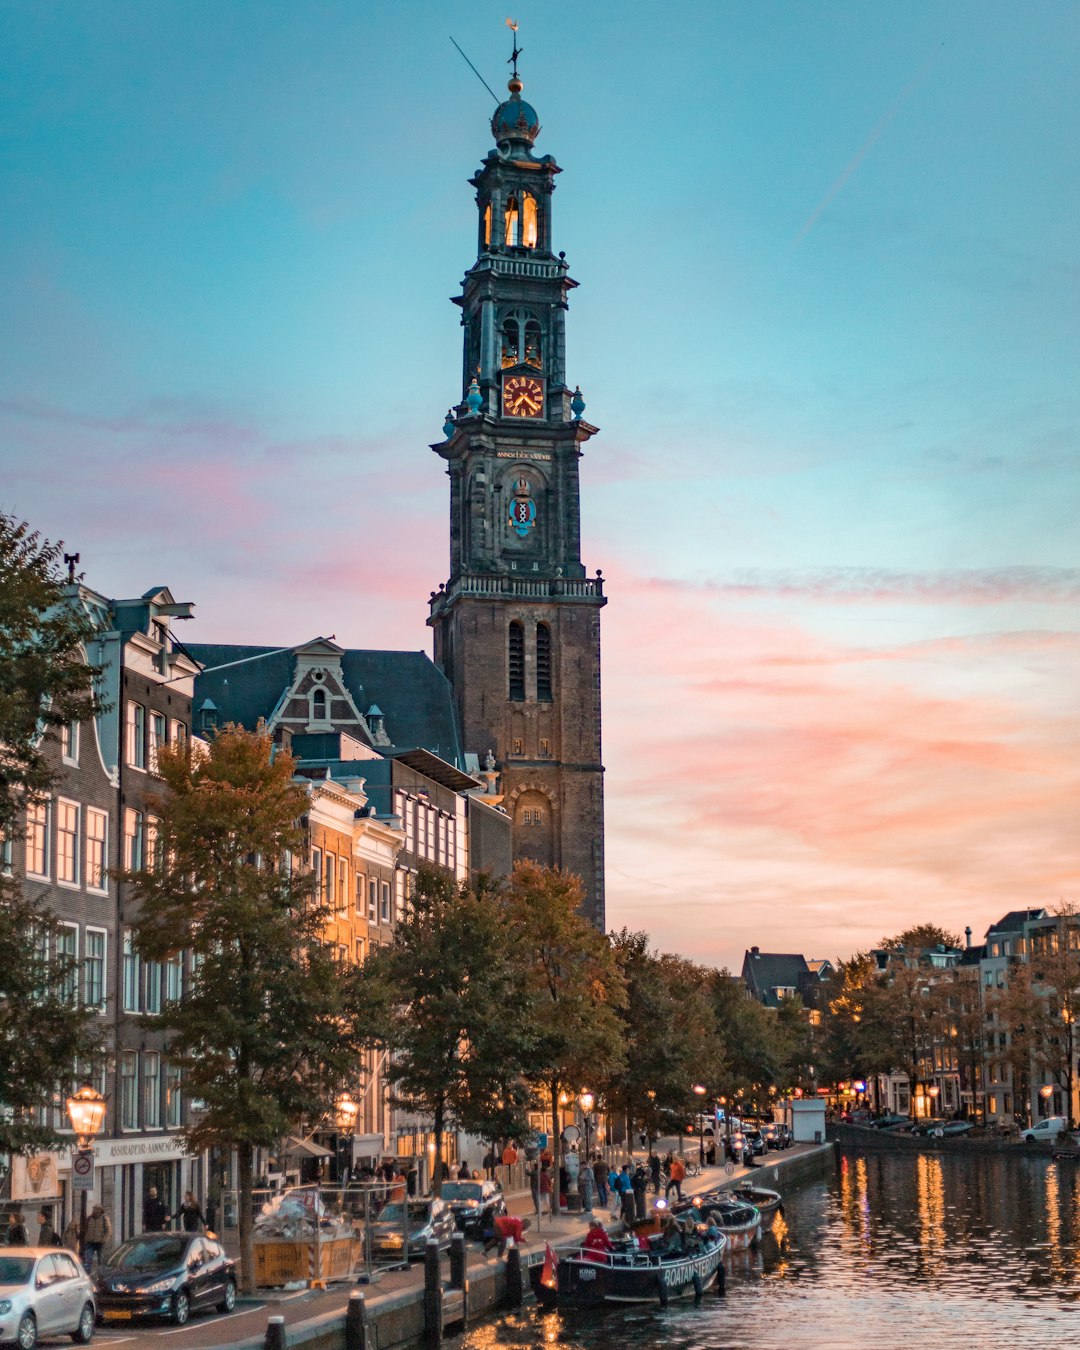 Travel Tips and Stories of Westerkerk in Netherlands